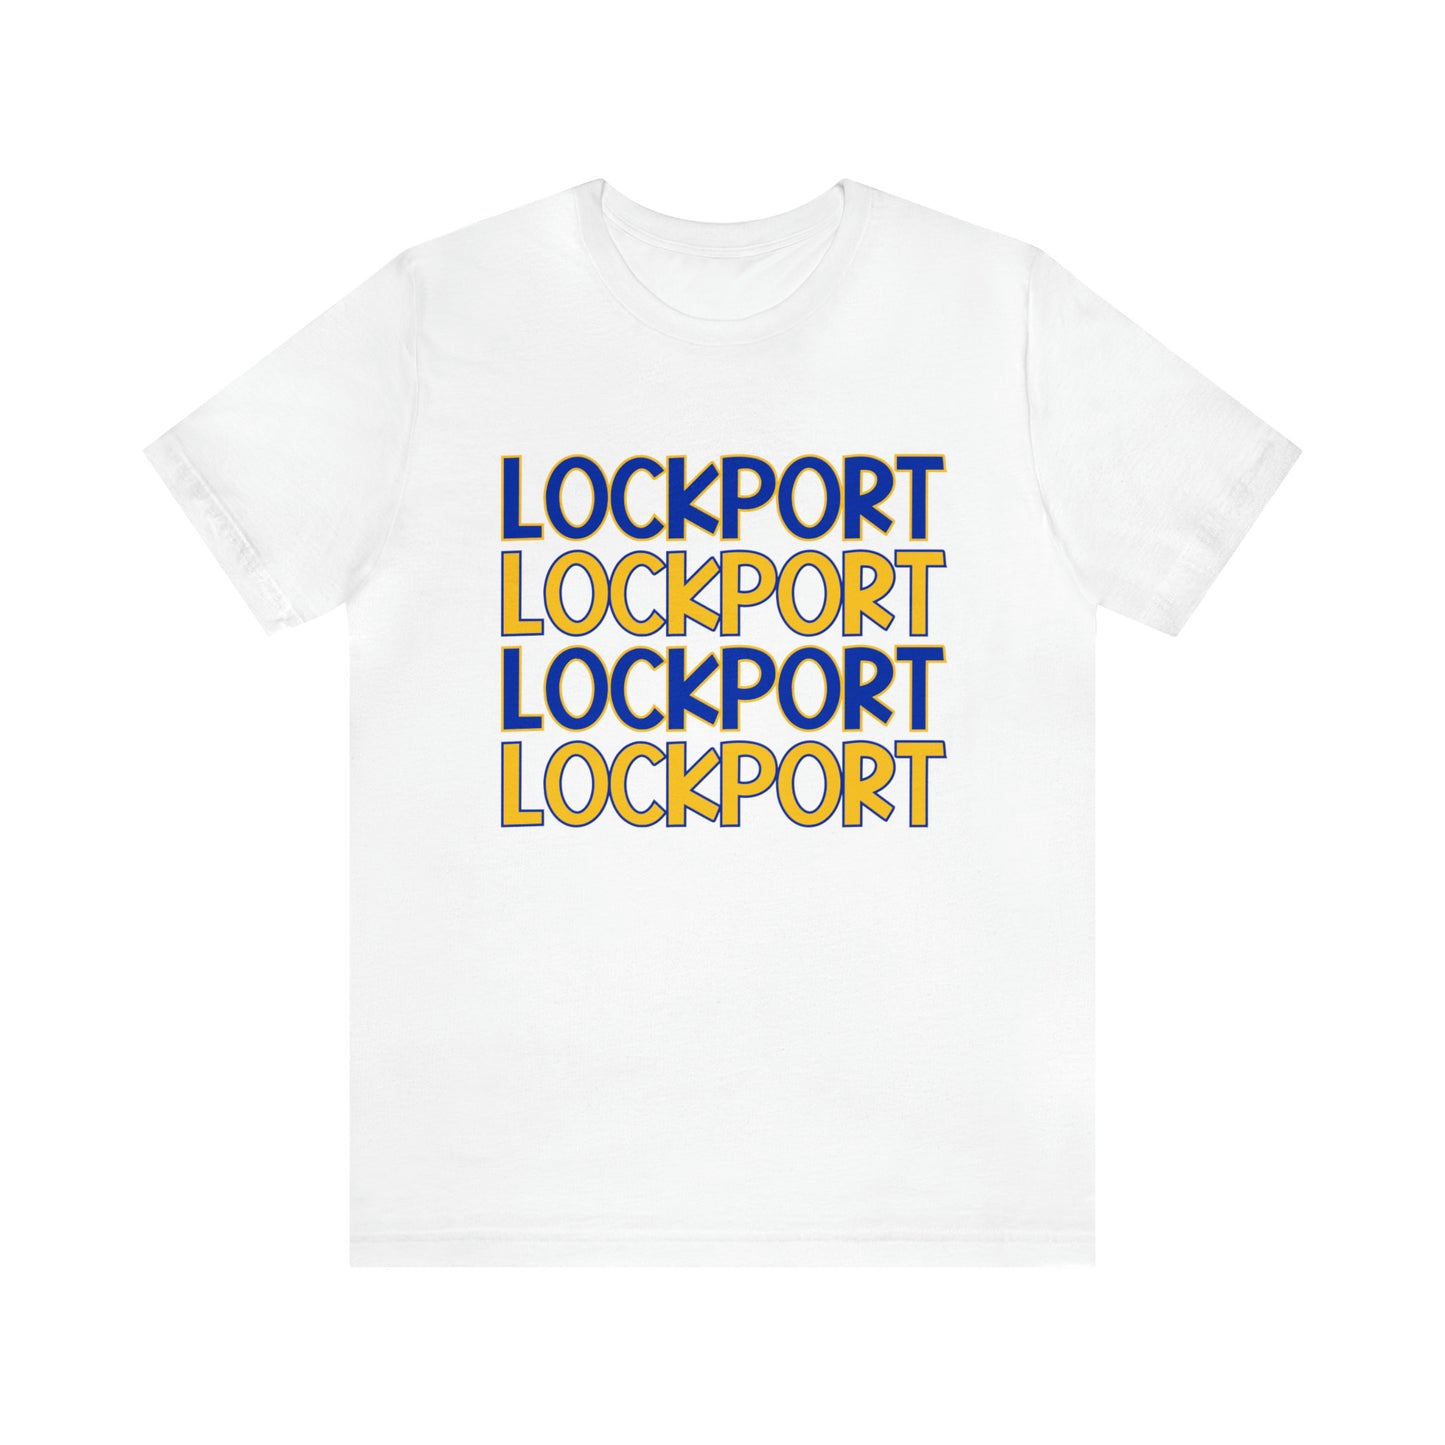 Lockport Lockport - Tshirt, Long Sleeve, Crewneck, Hoodie, Zip up